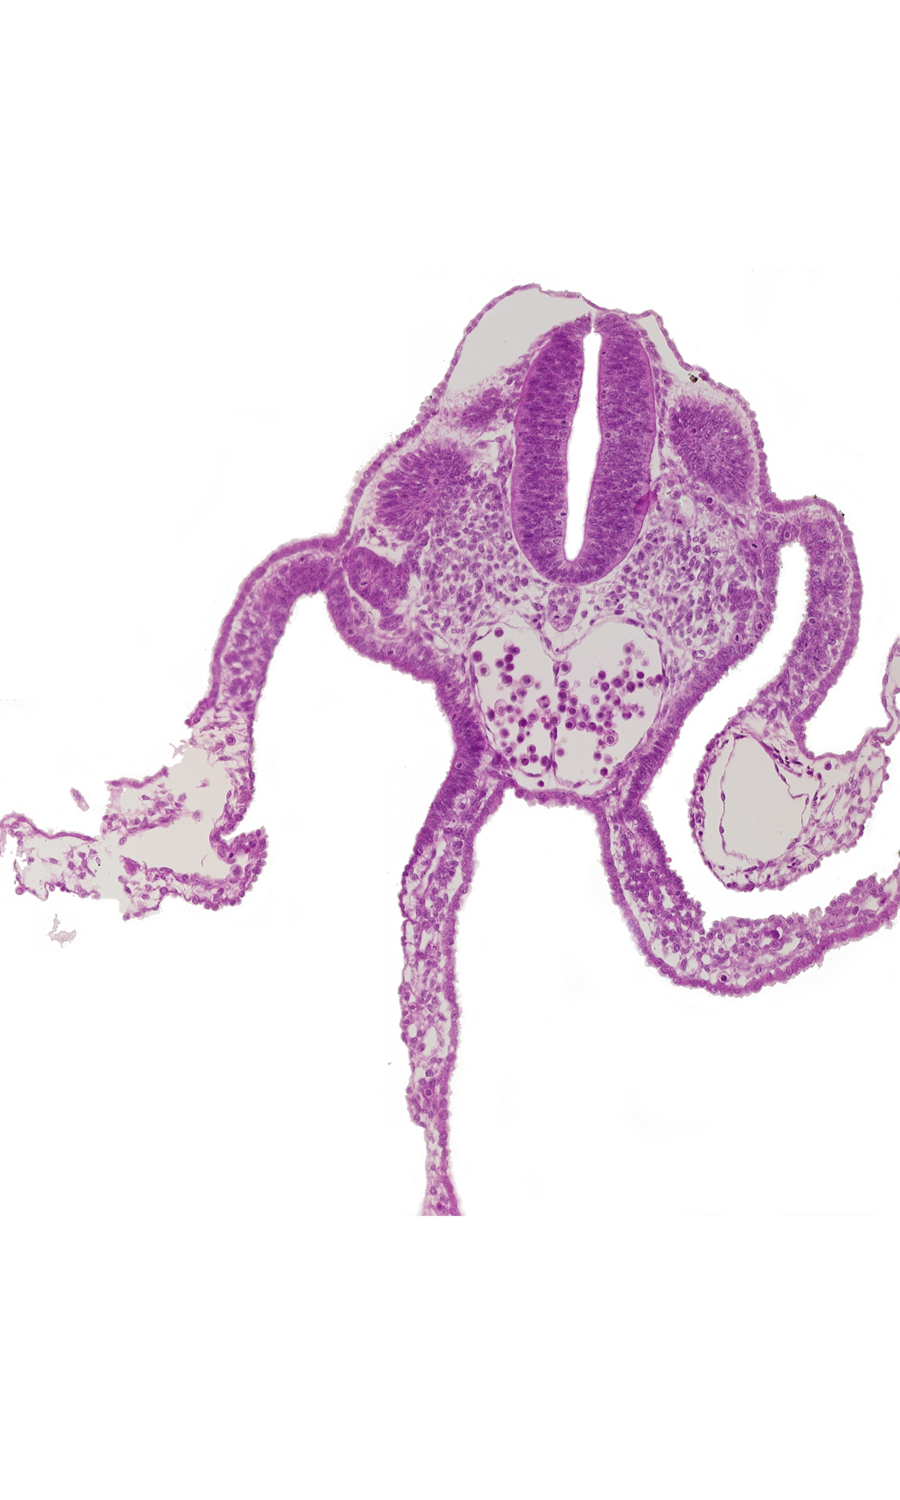 artifact separation(s), caudal edge of dermatomyotome 10 (C-6), communication between dorsal aortas, left umbilical vein, lumen of neural tube, mesonephric vesicle(s), midgut, peritoneal cavity, presumptive upper limb bud, primordial omental bursa